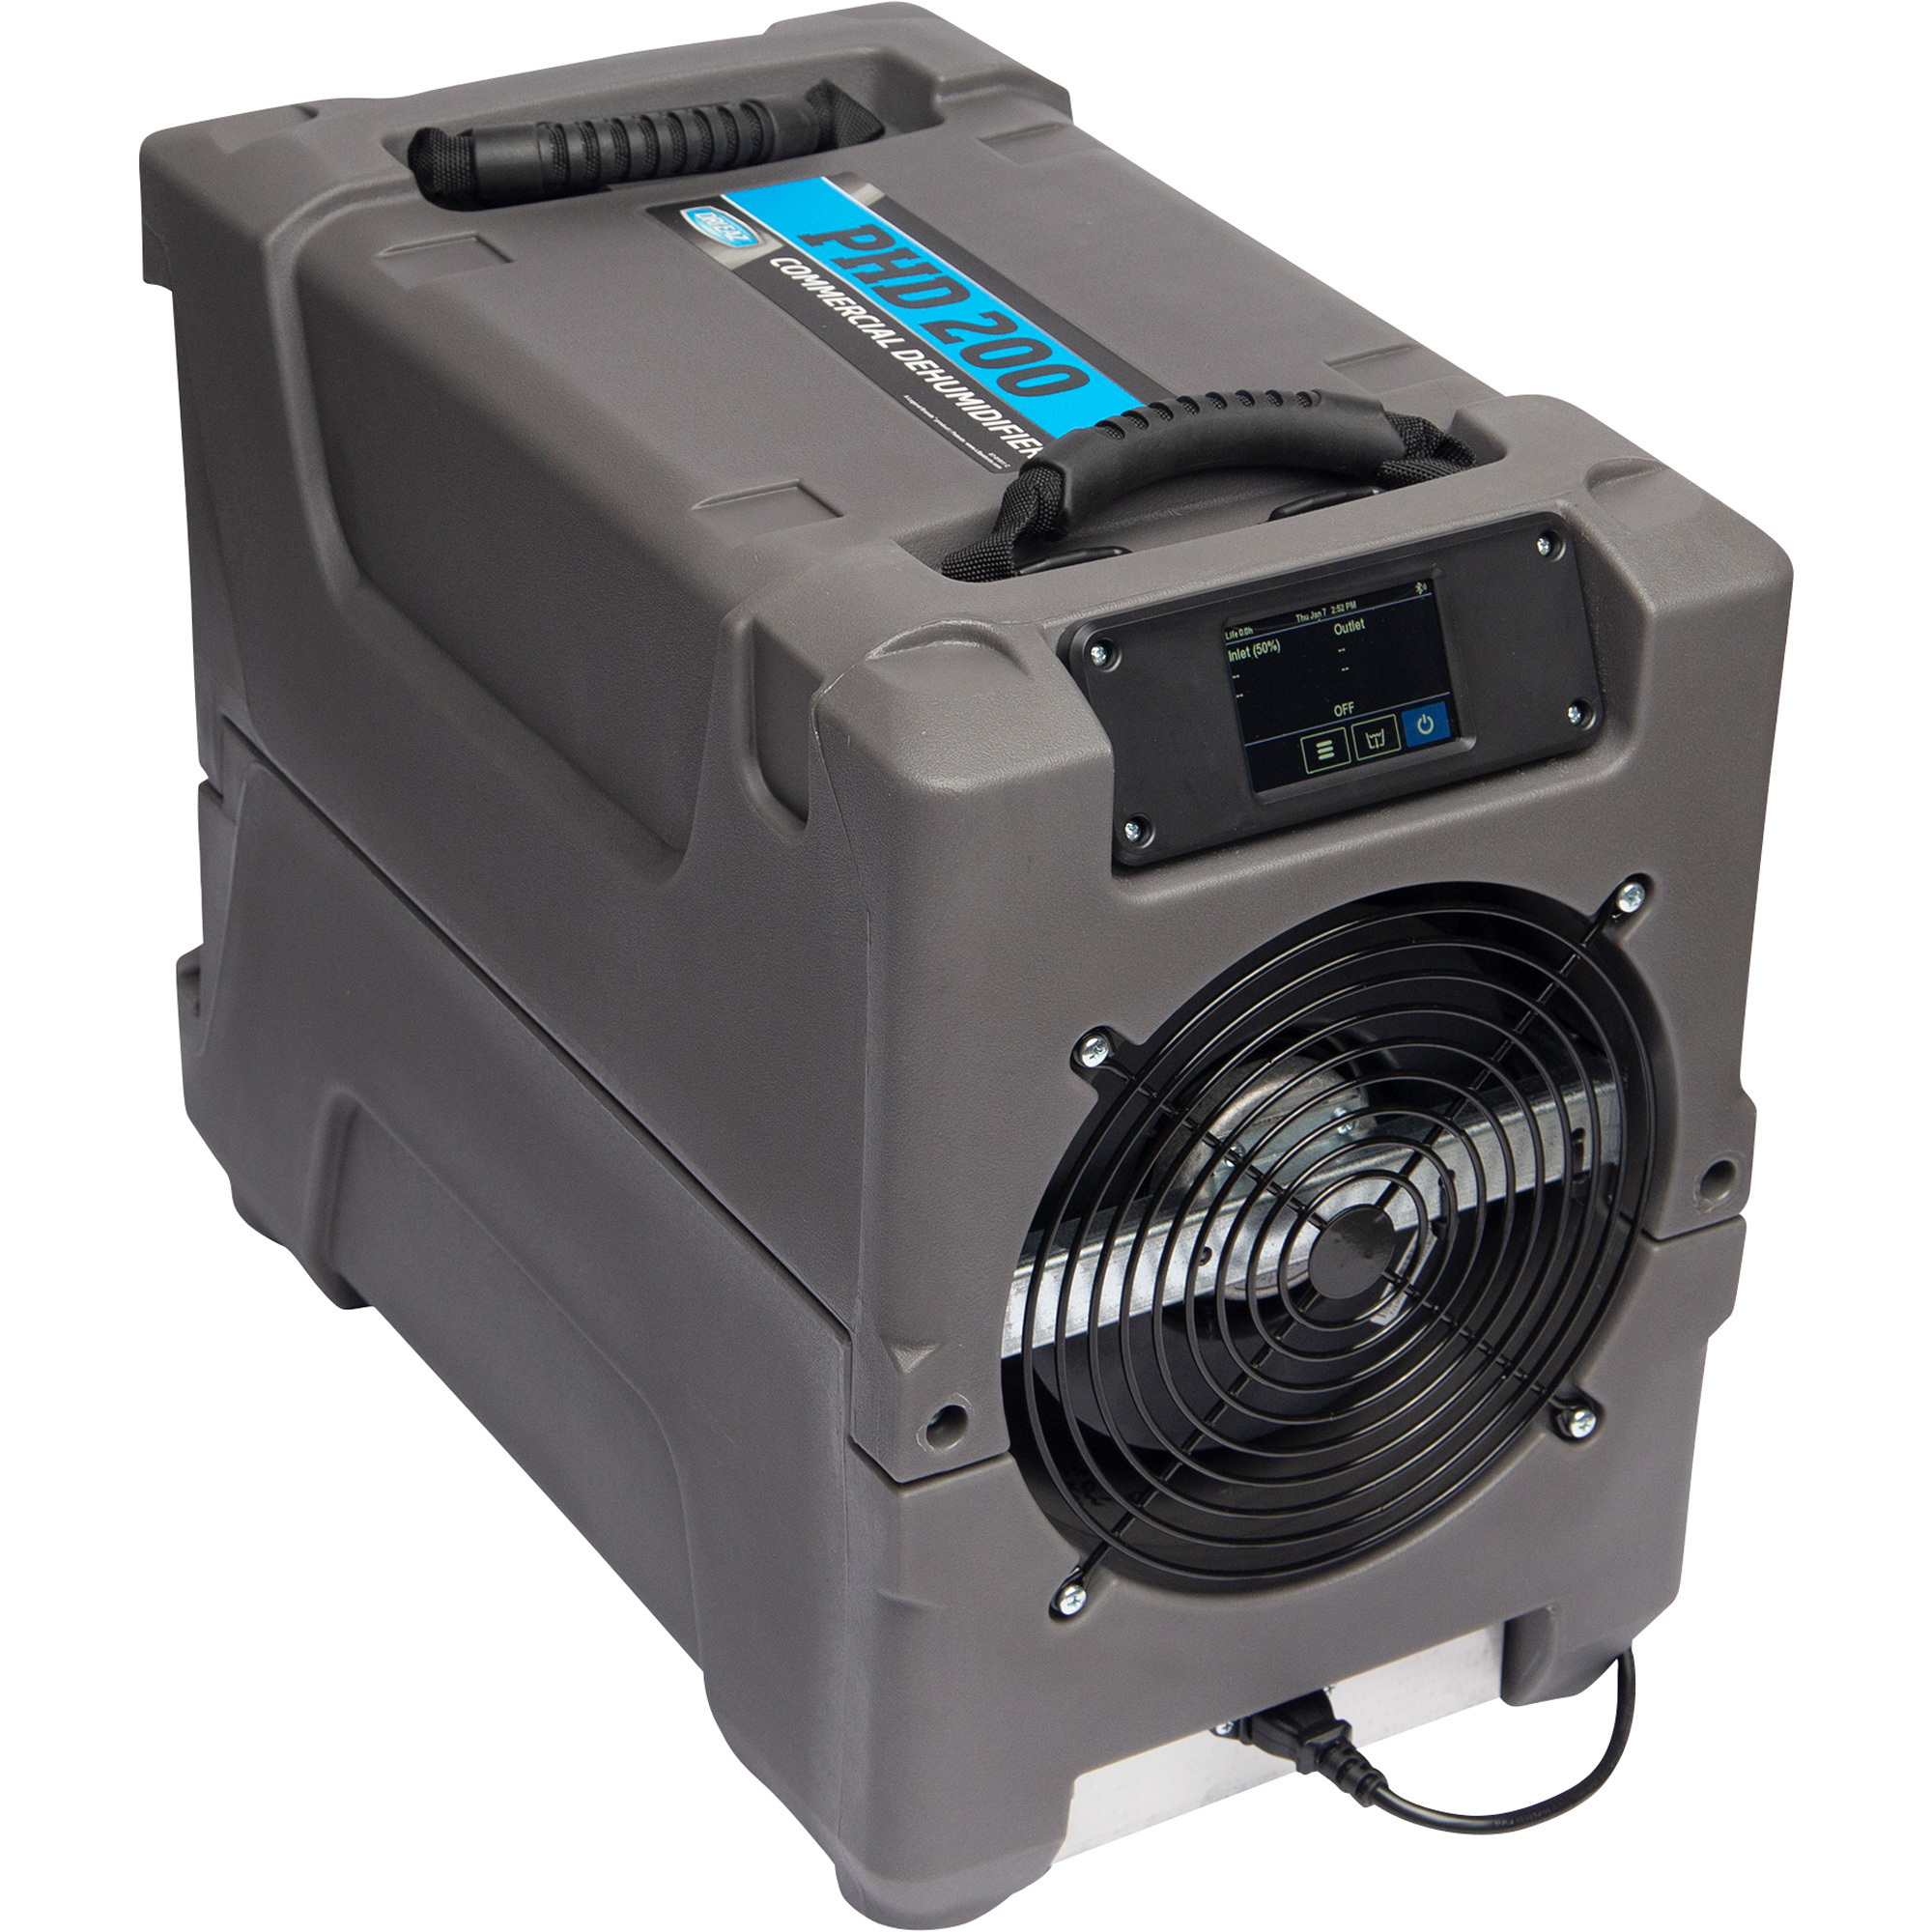 Dri-Eaz PHD200 Commercial Dehumidifier, 74-Pint Capacity, Model F515